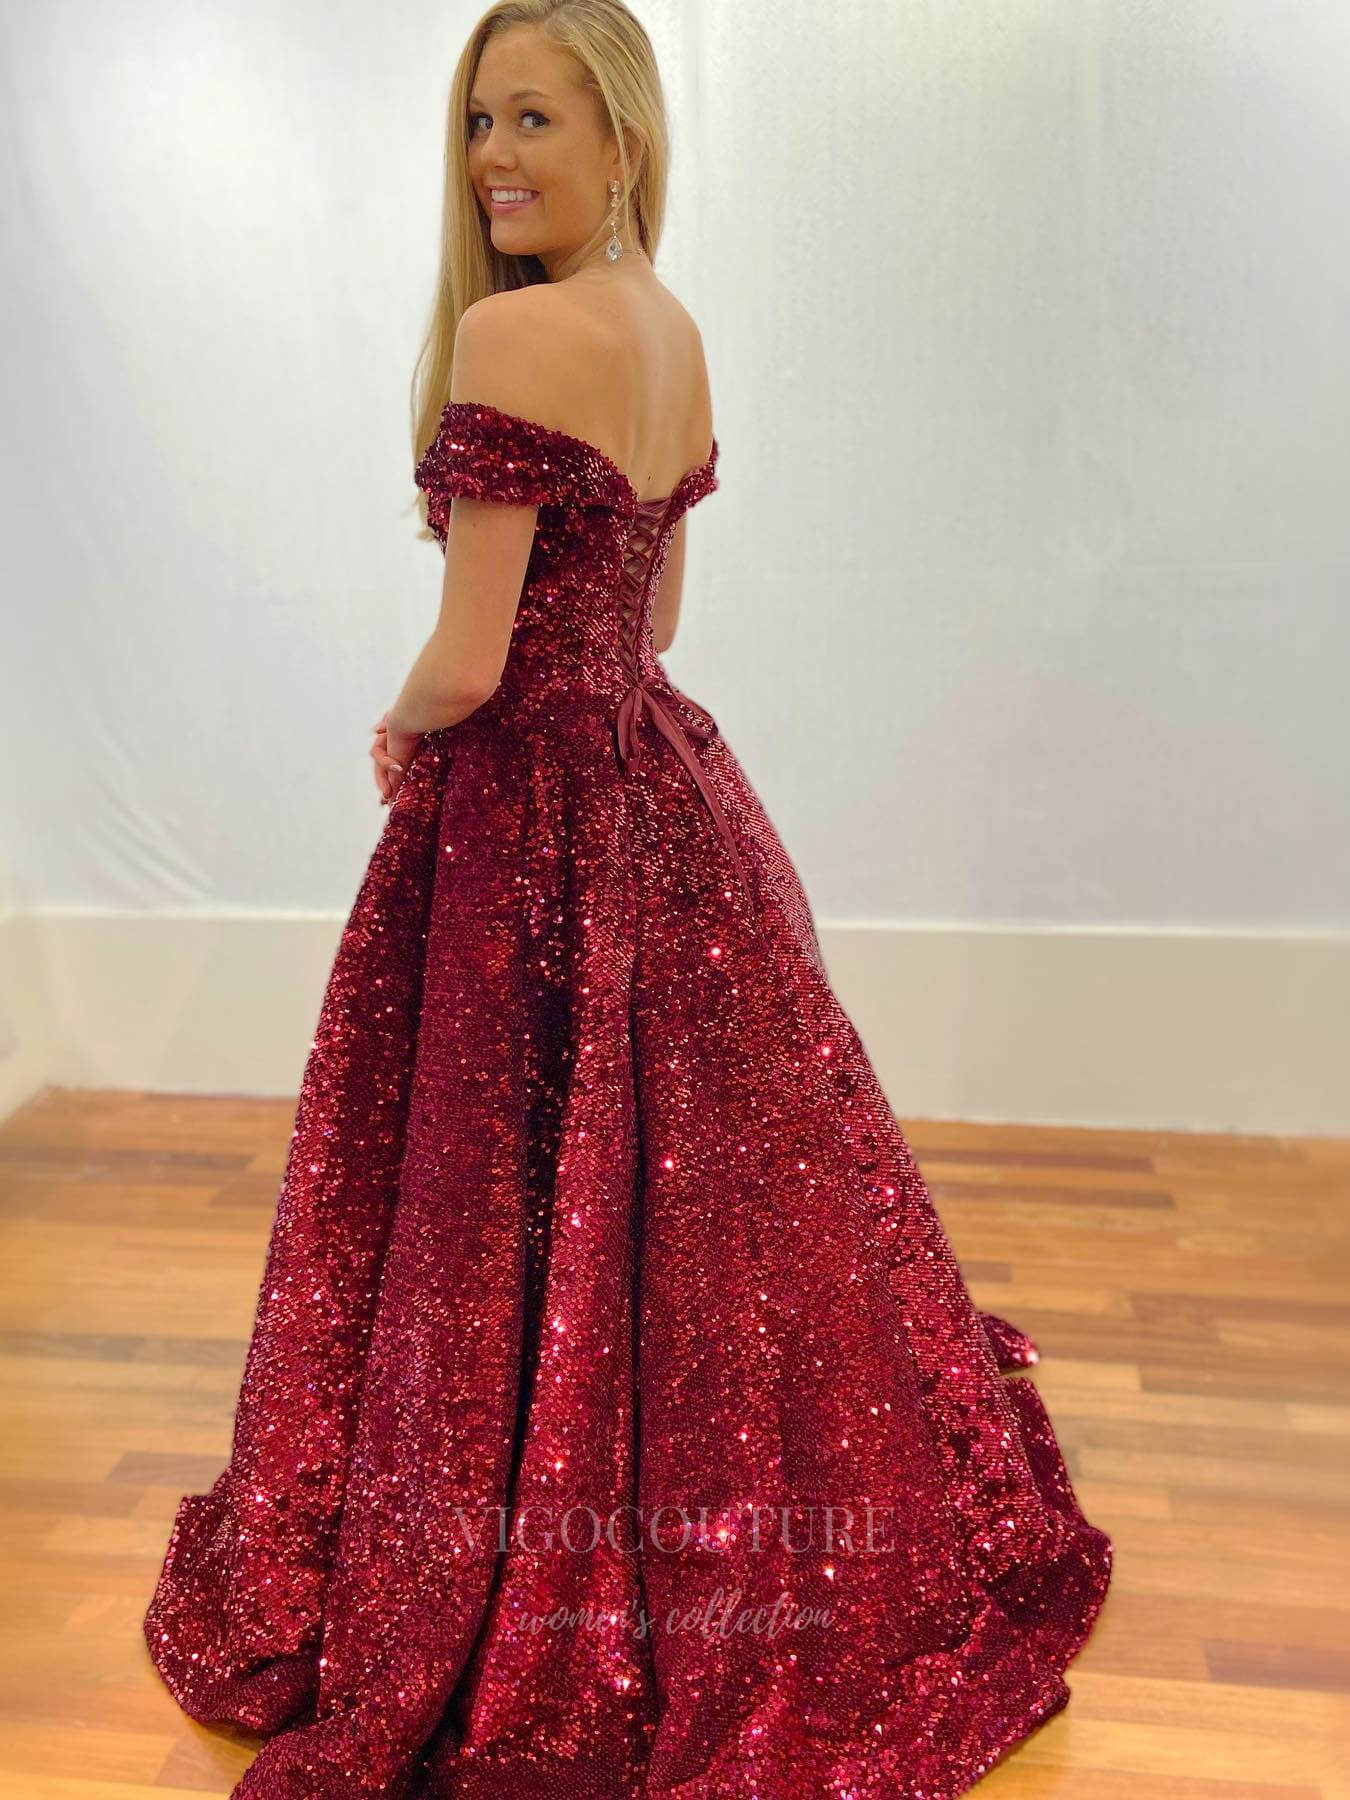 vigocouture-Burgundy Sequin Off the Shoulder Prom Dress 20956-Prom Dresses-vigocouture-